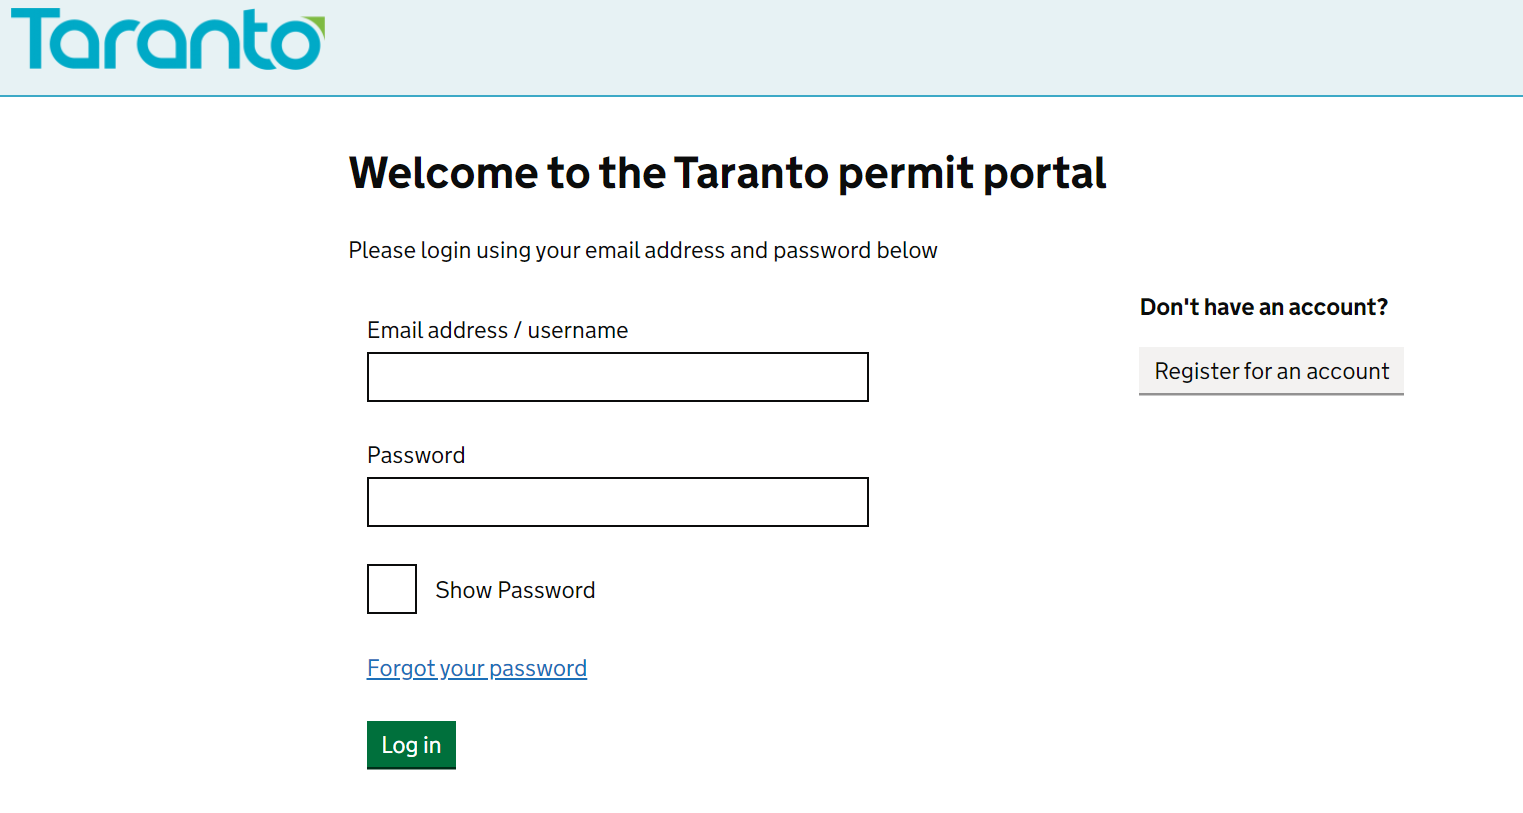 online permit portal in .GOV format